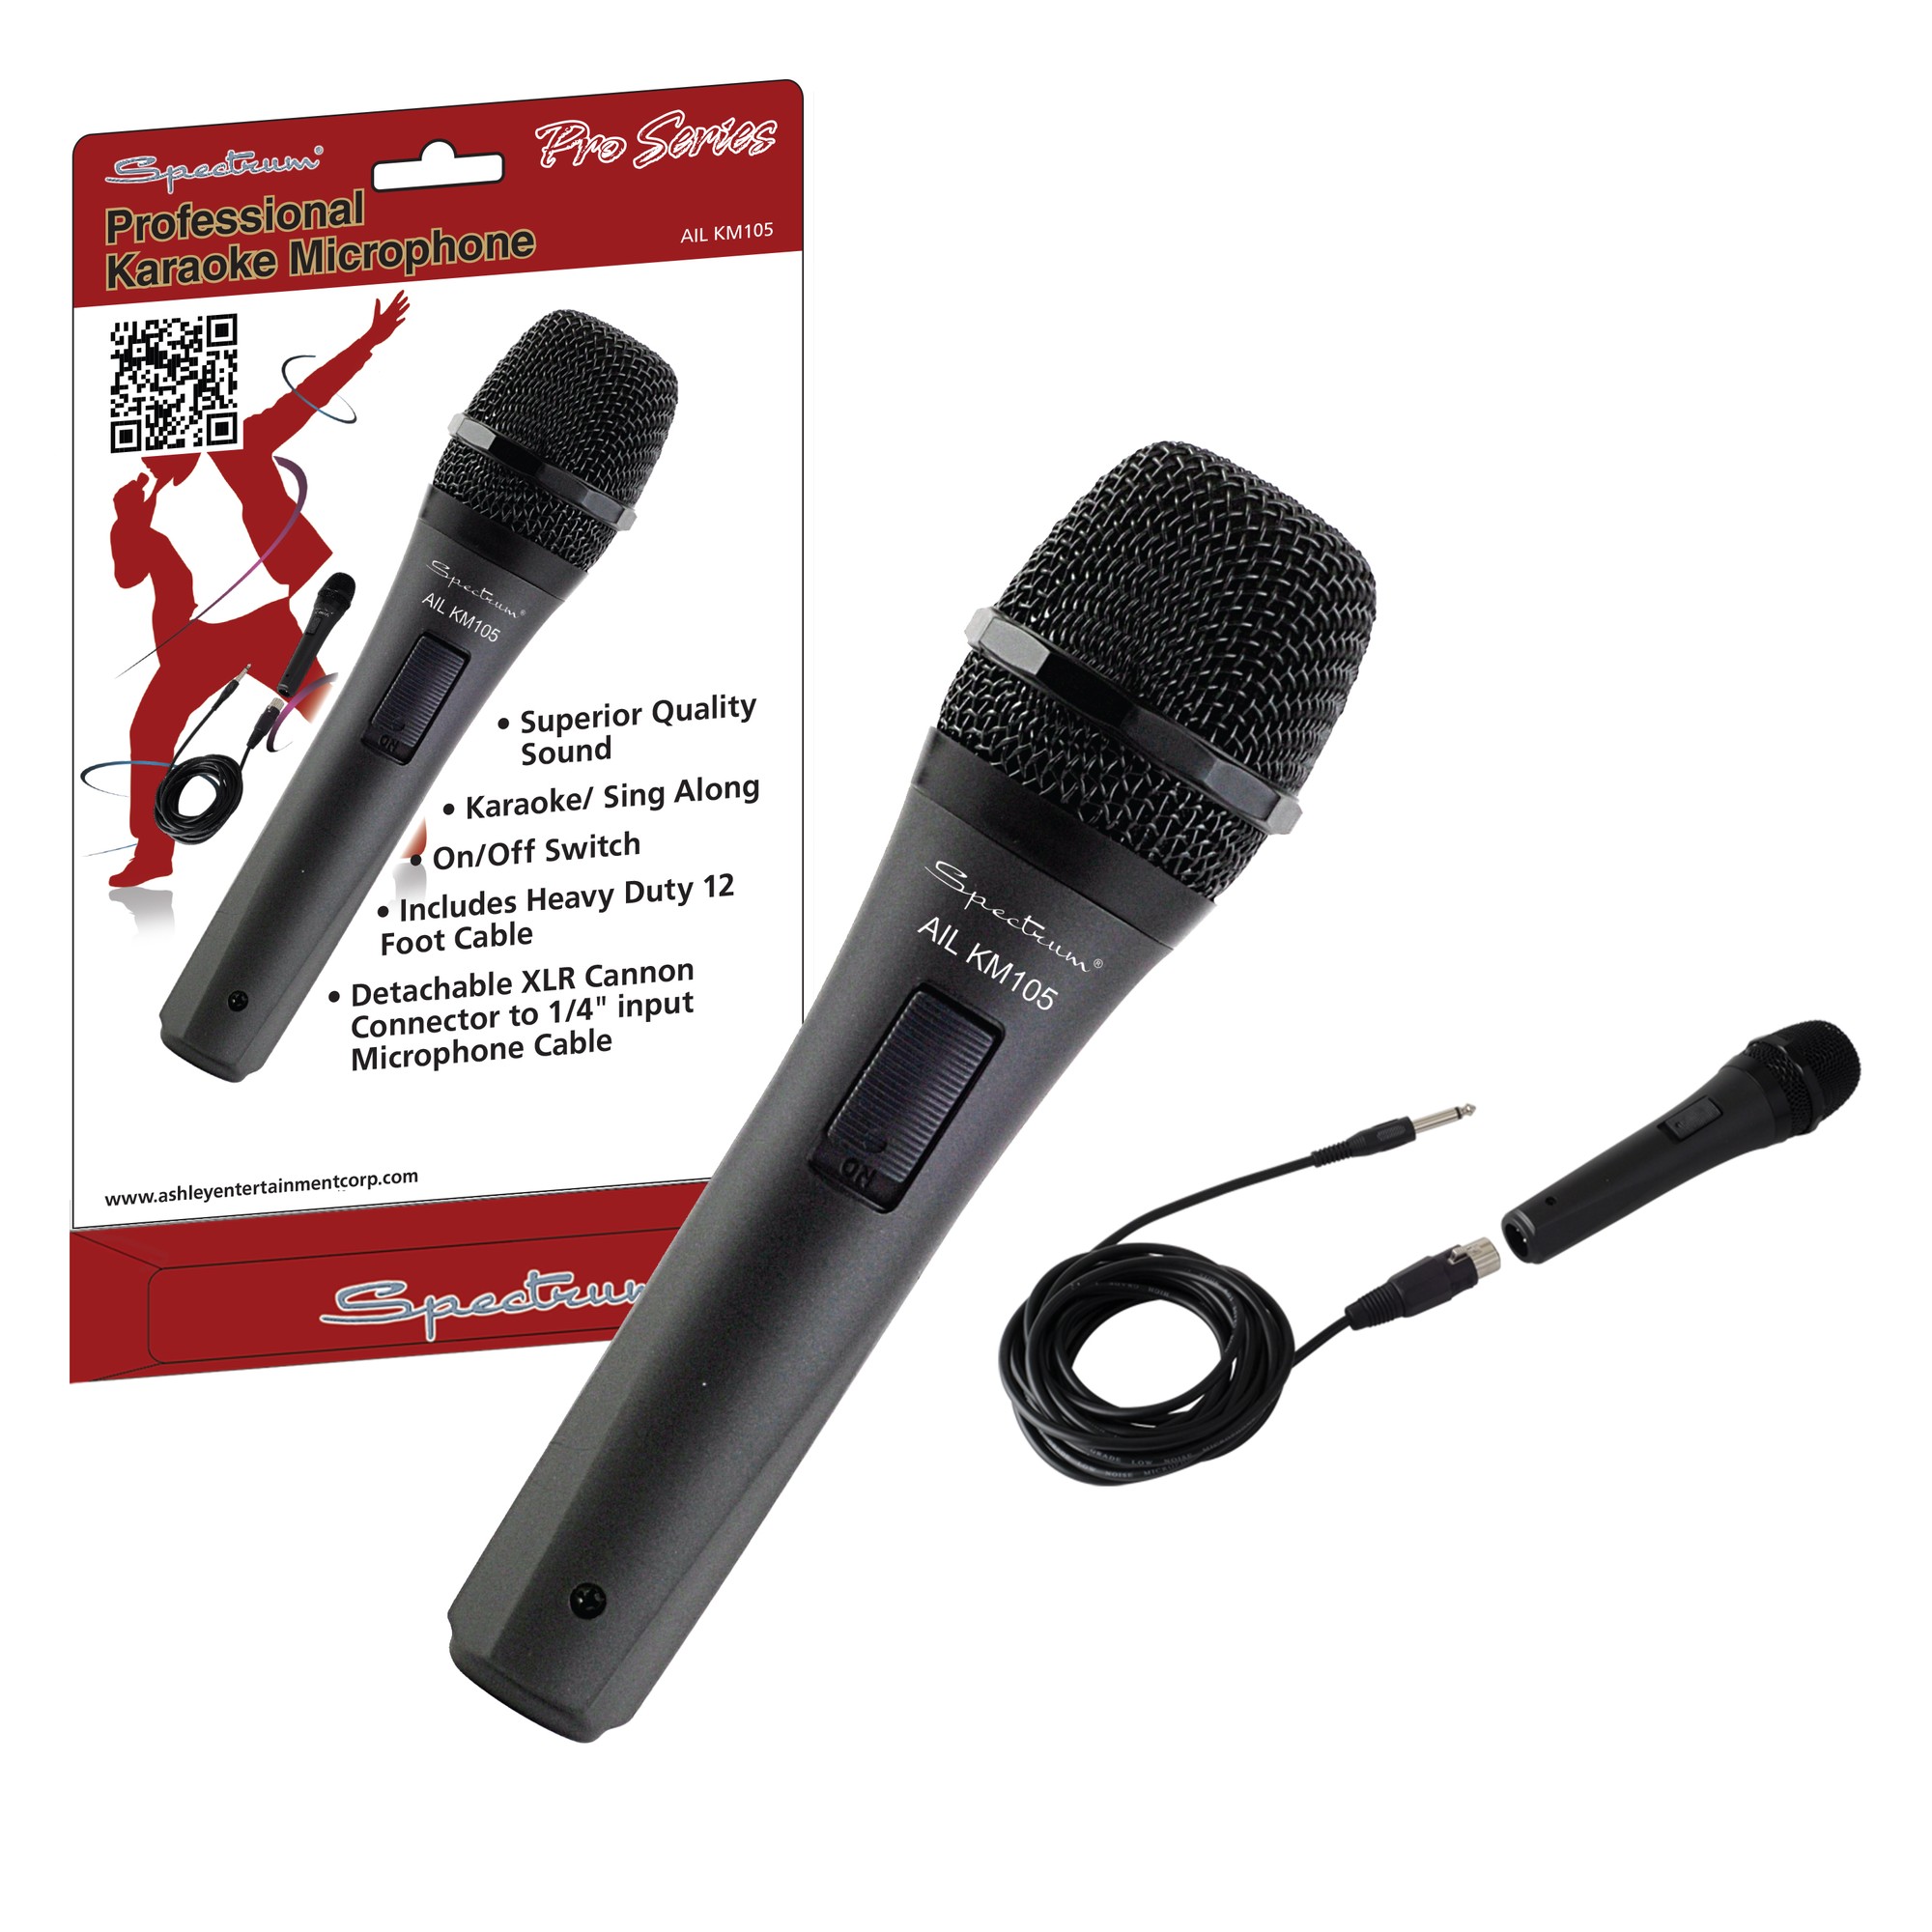 Spectrum AIL KM105 Professional Karaoke Microphone